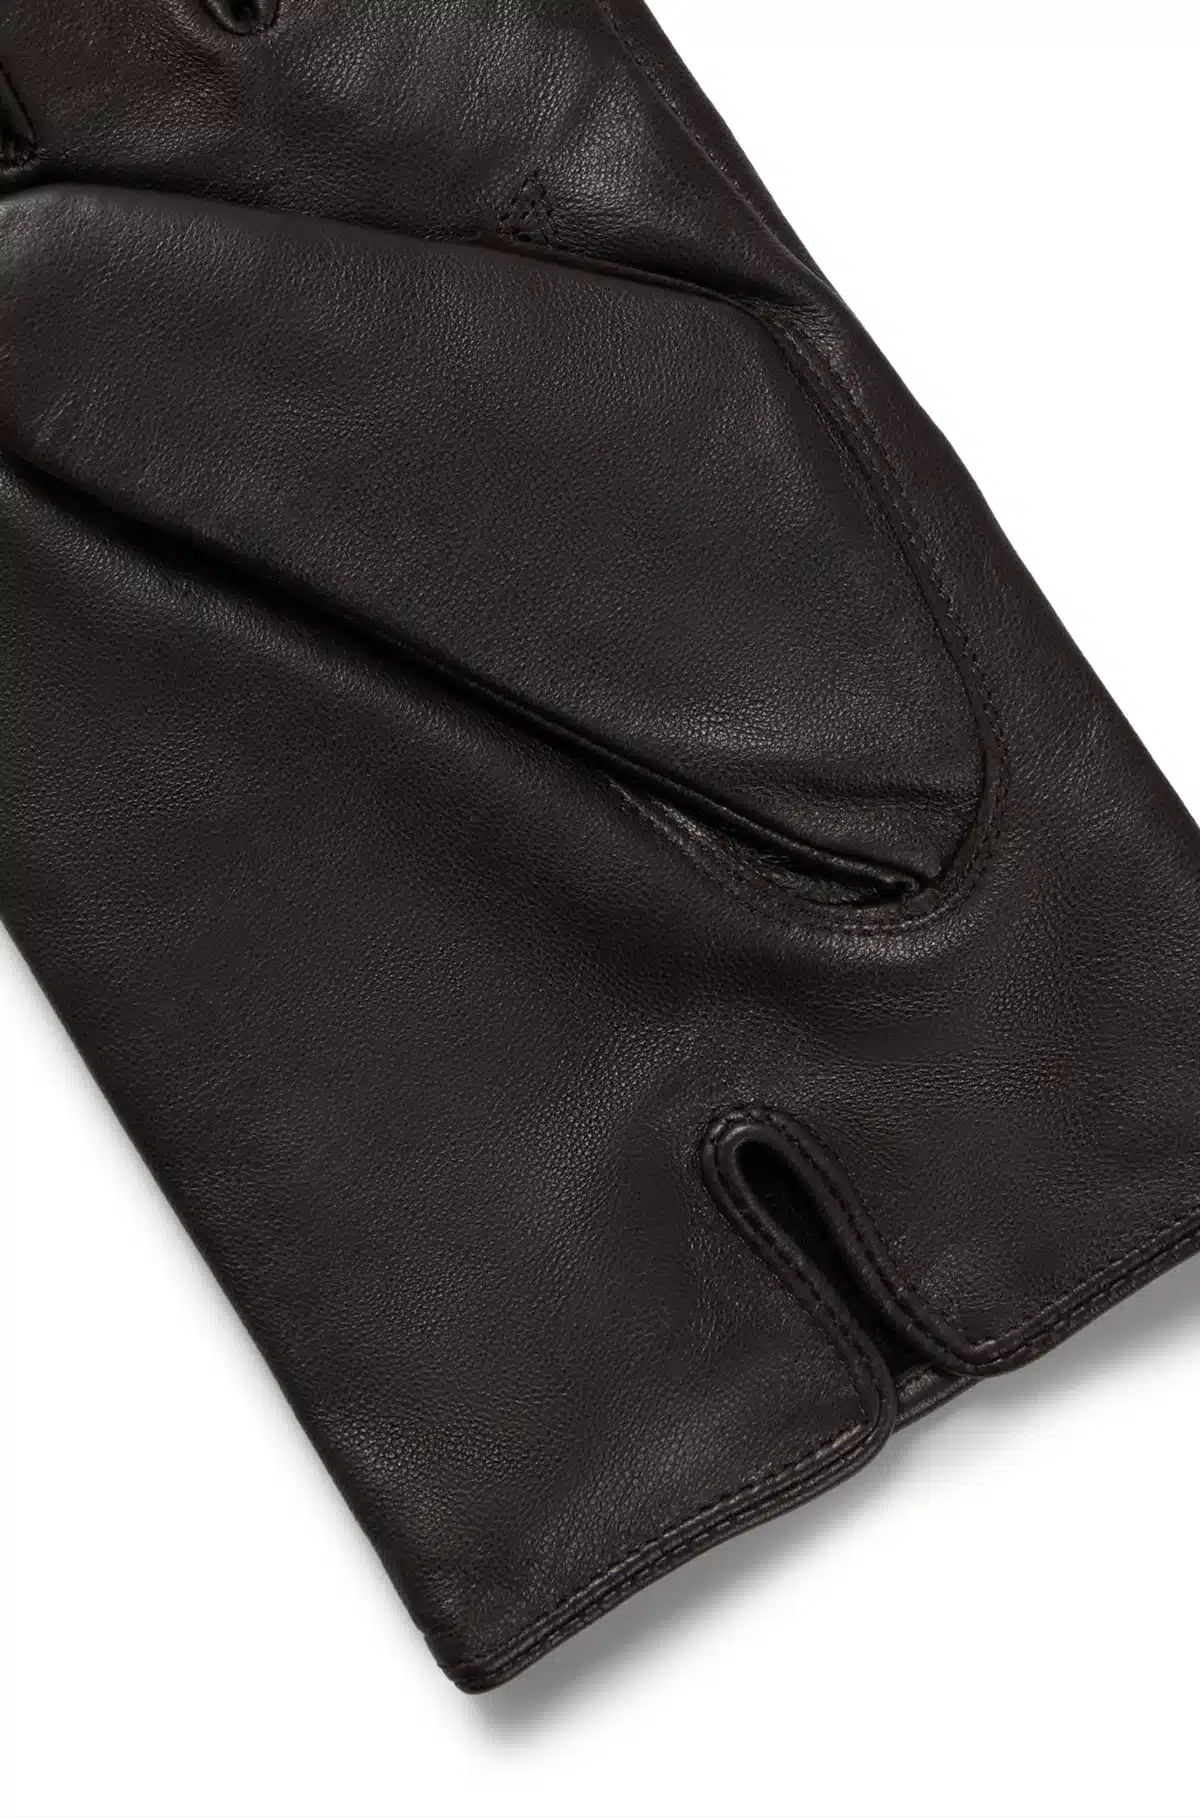 Buy Boss Hainz Leather Gloves Dark Brown - Scandinavian Fashion Store